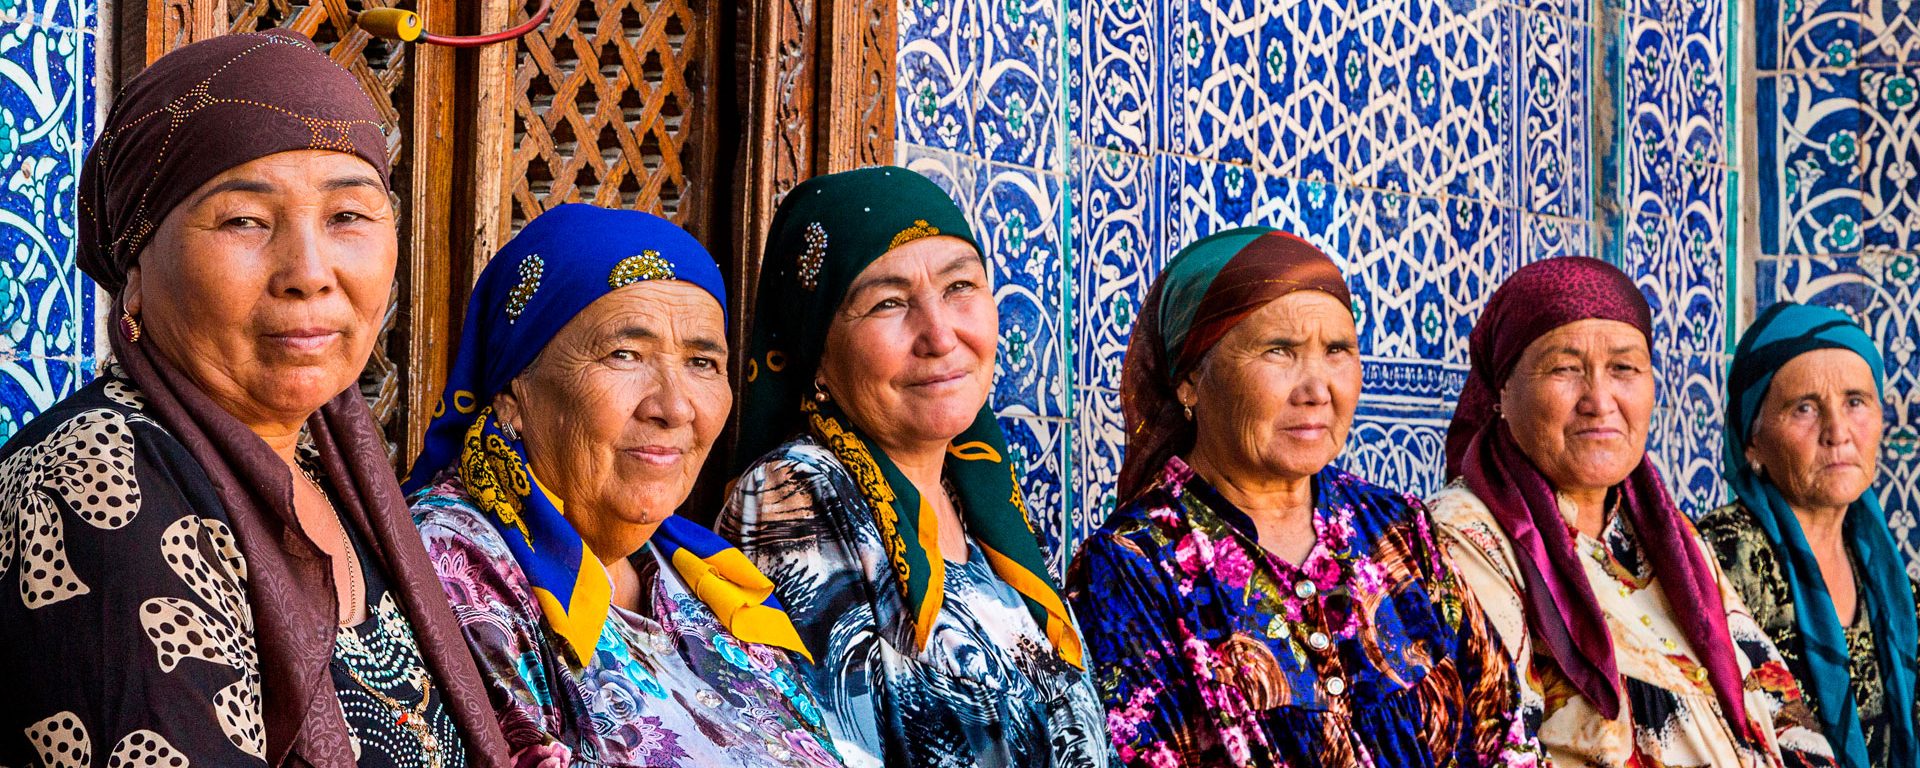 Uzbek women in colorful dress, Uzbekistan